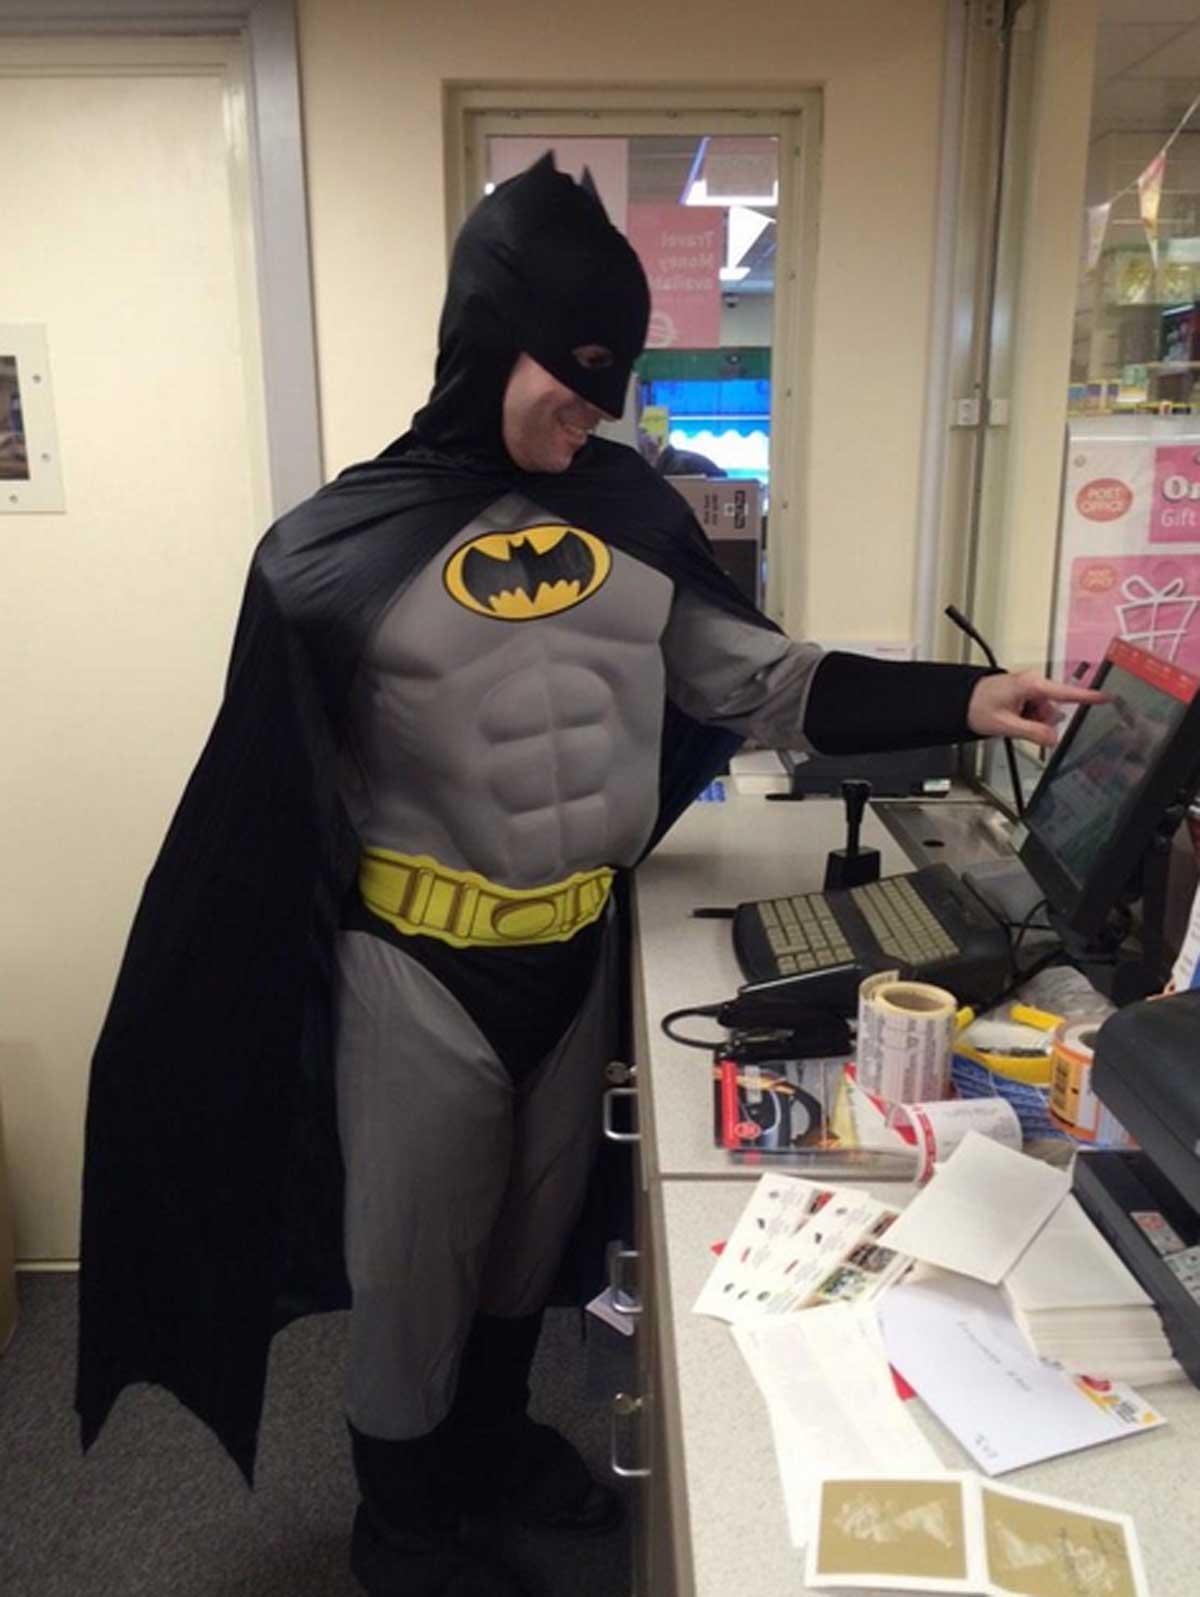 'Batman' serves customers at Boscombe East Post Office